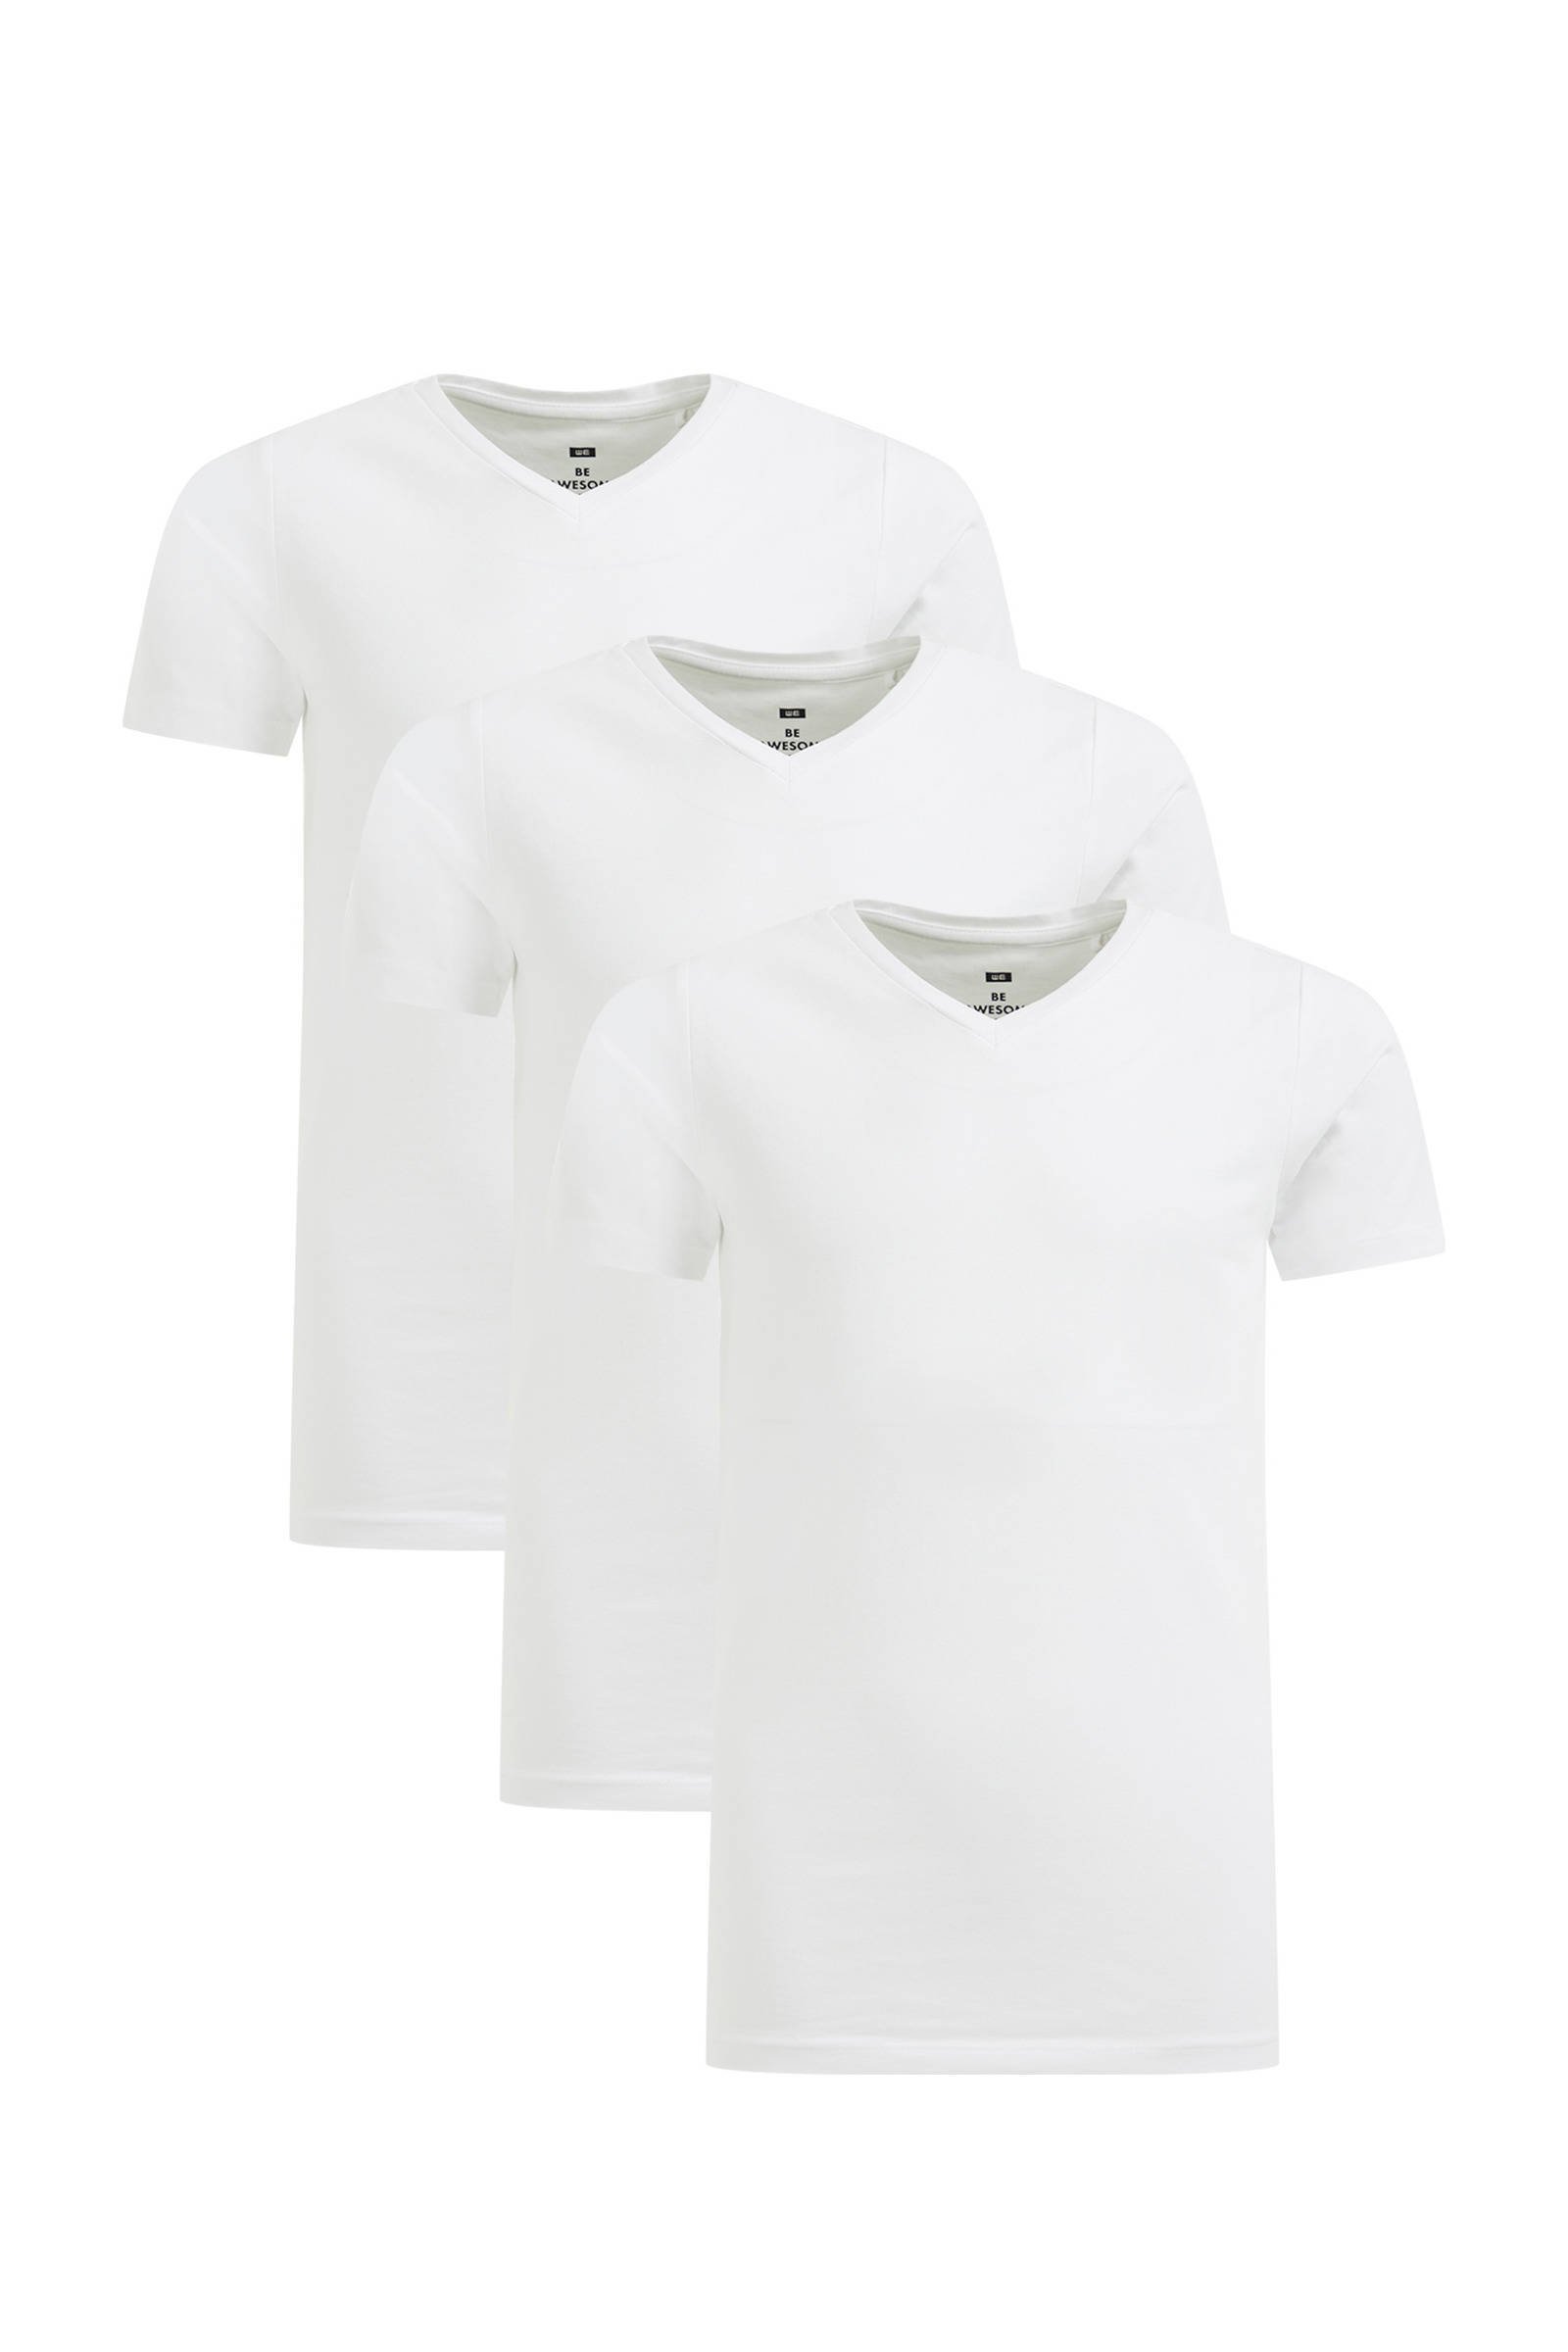 4 shirt set 4 Birthday Shirts Set for Family Birthday Shirt Set with Jungle Tees Kleding Jongenskleding Tops & T-shirts 